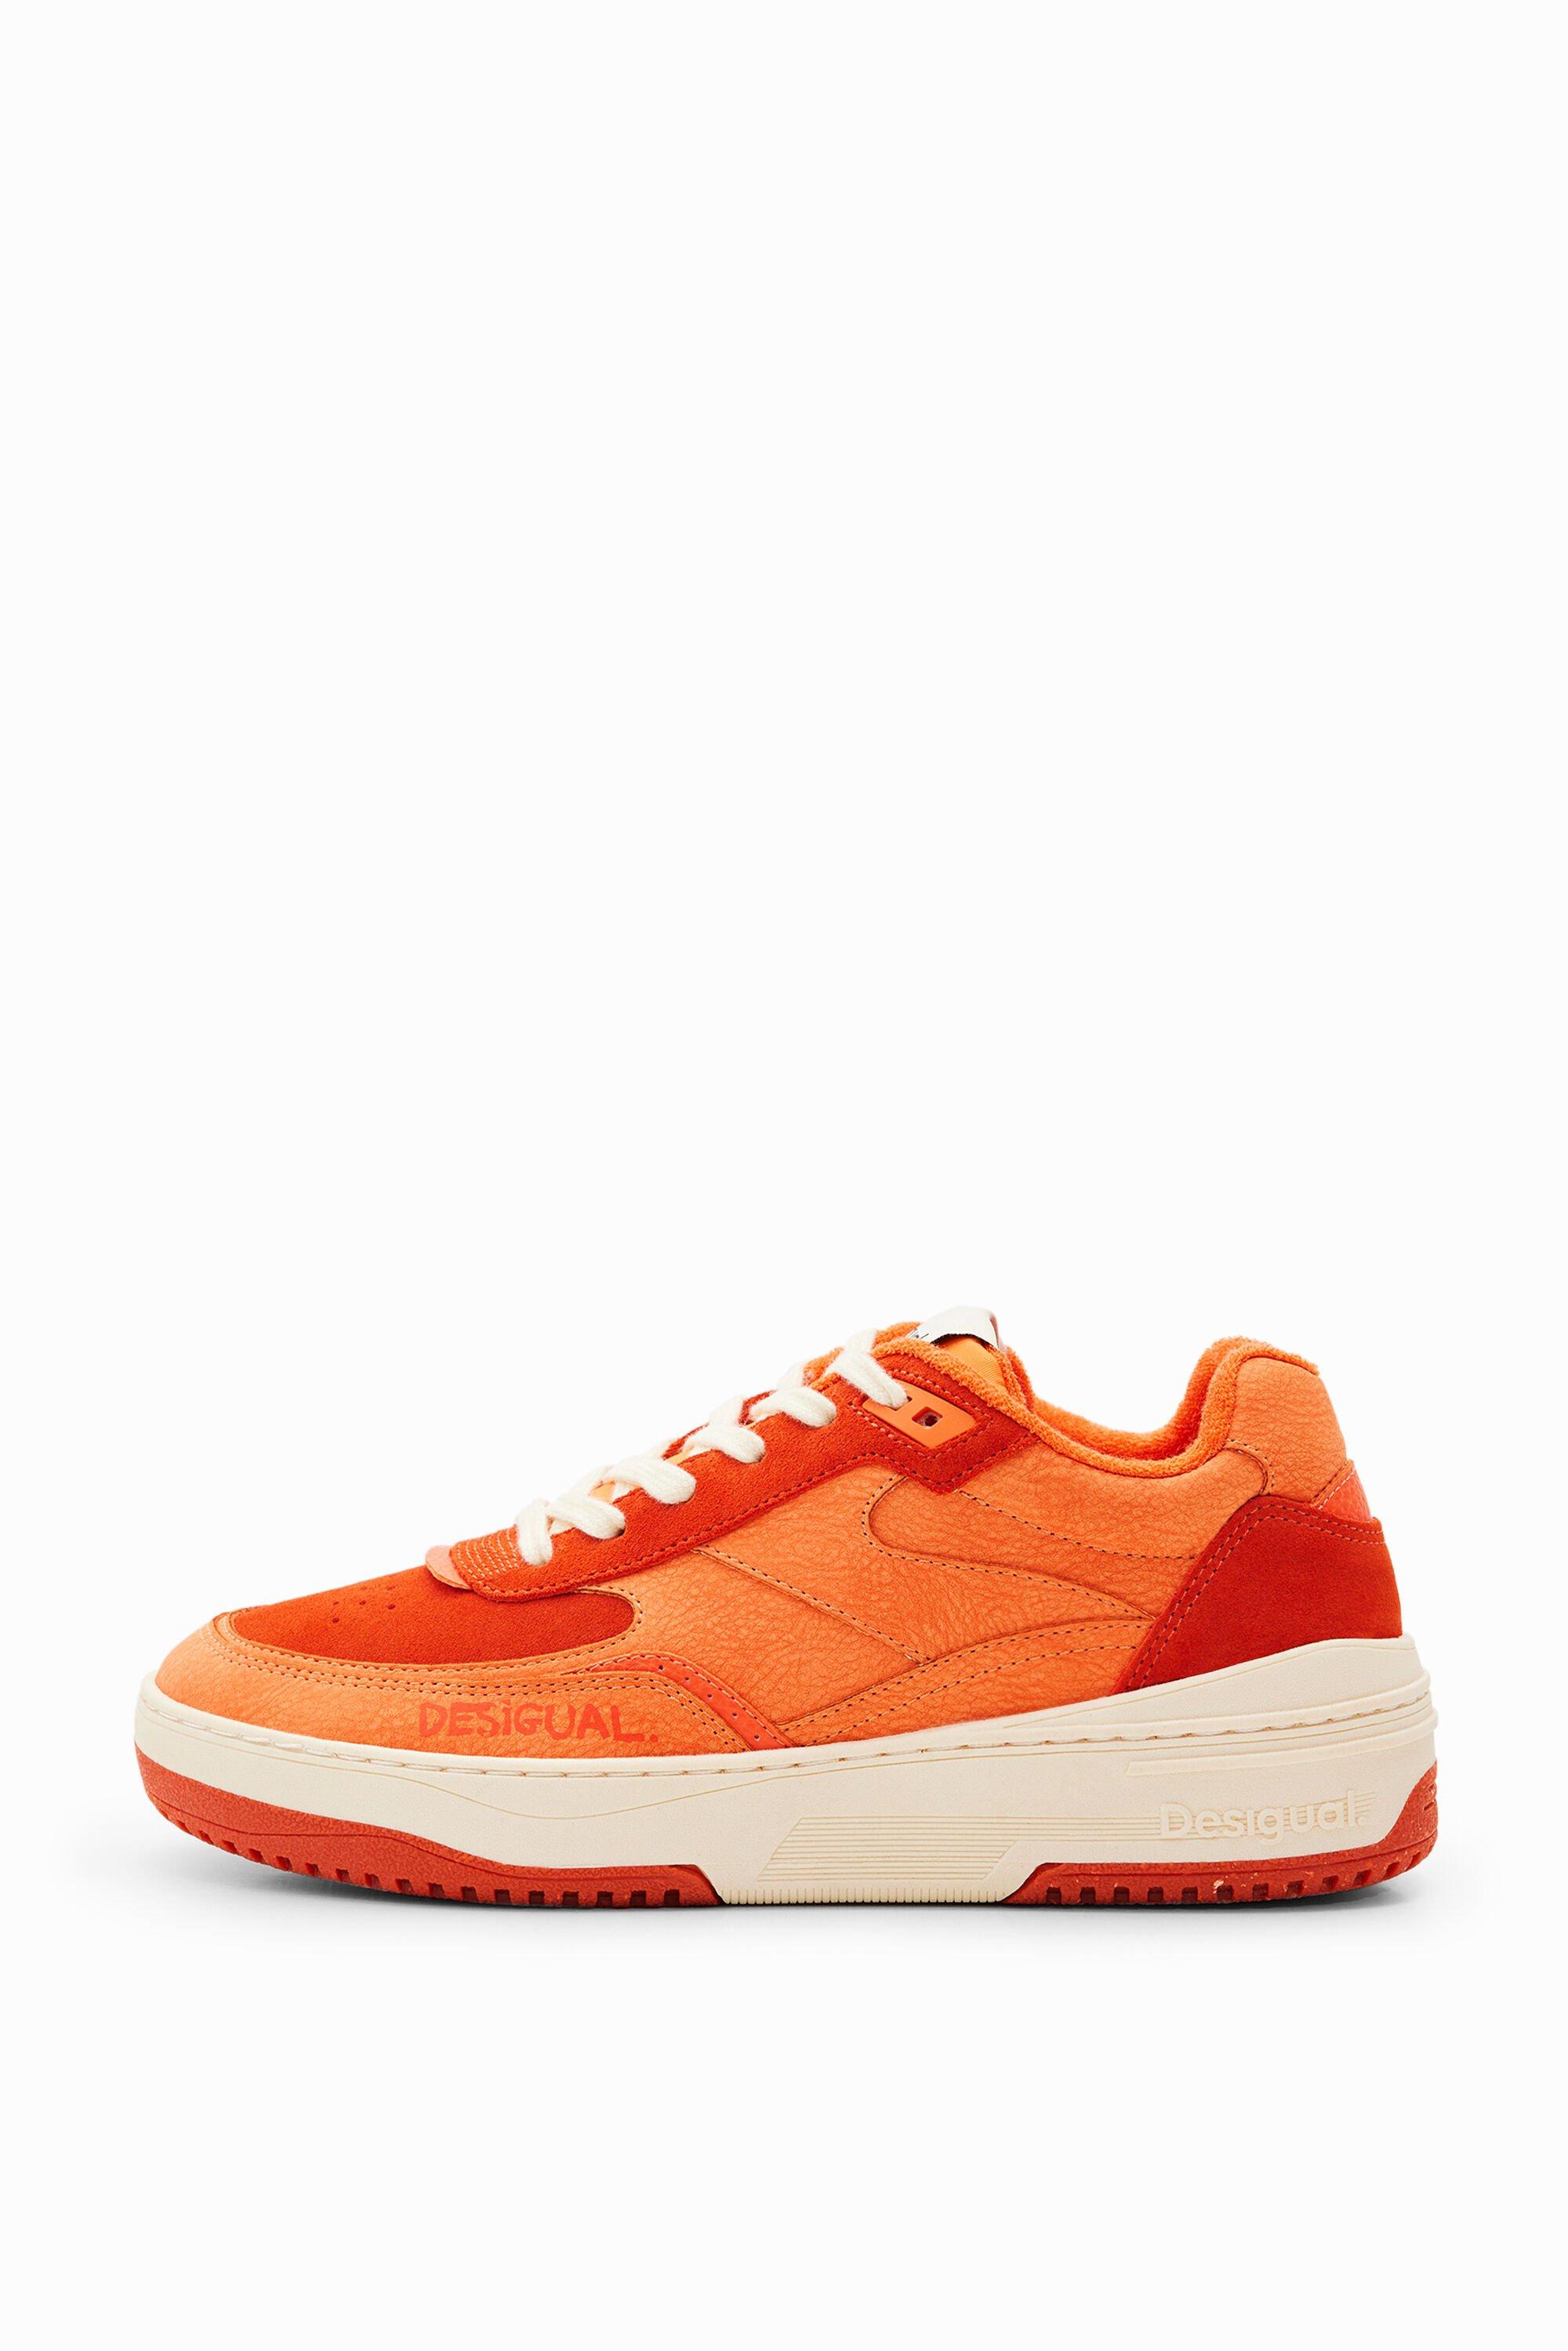 Desigual Retro Chunky Patchwork Sneakers in Orange | Lyst